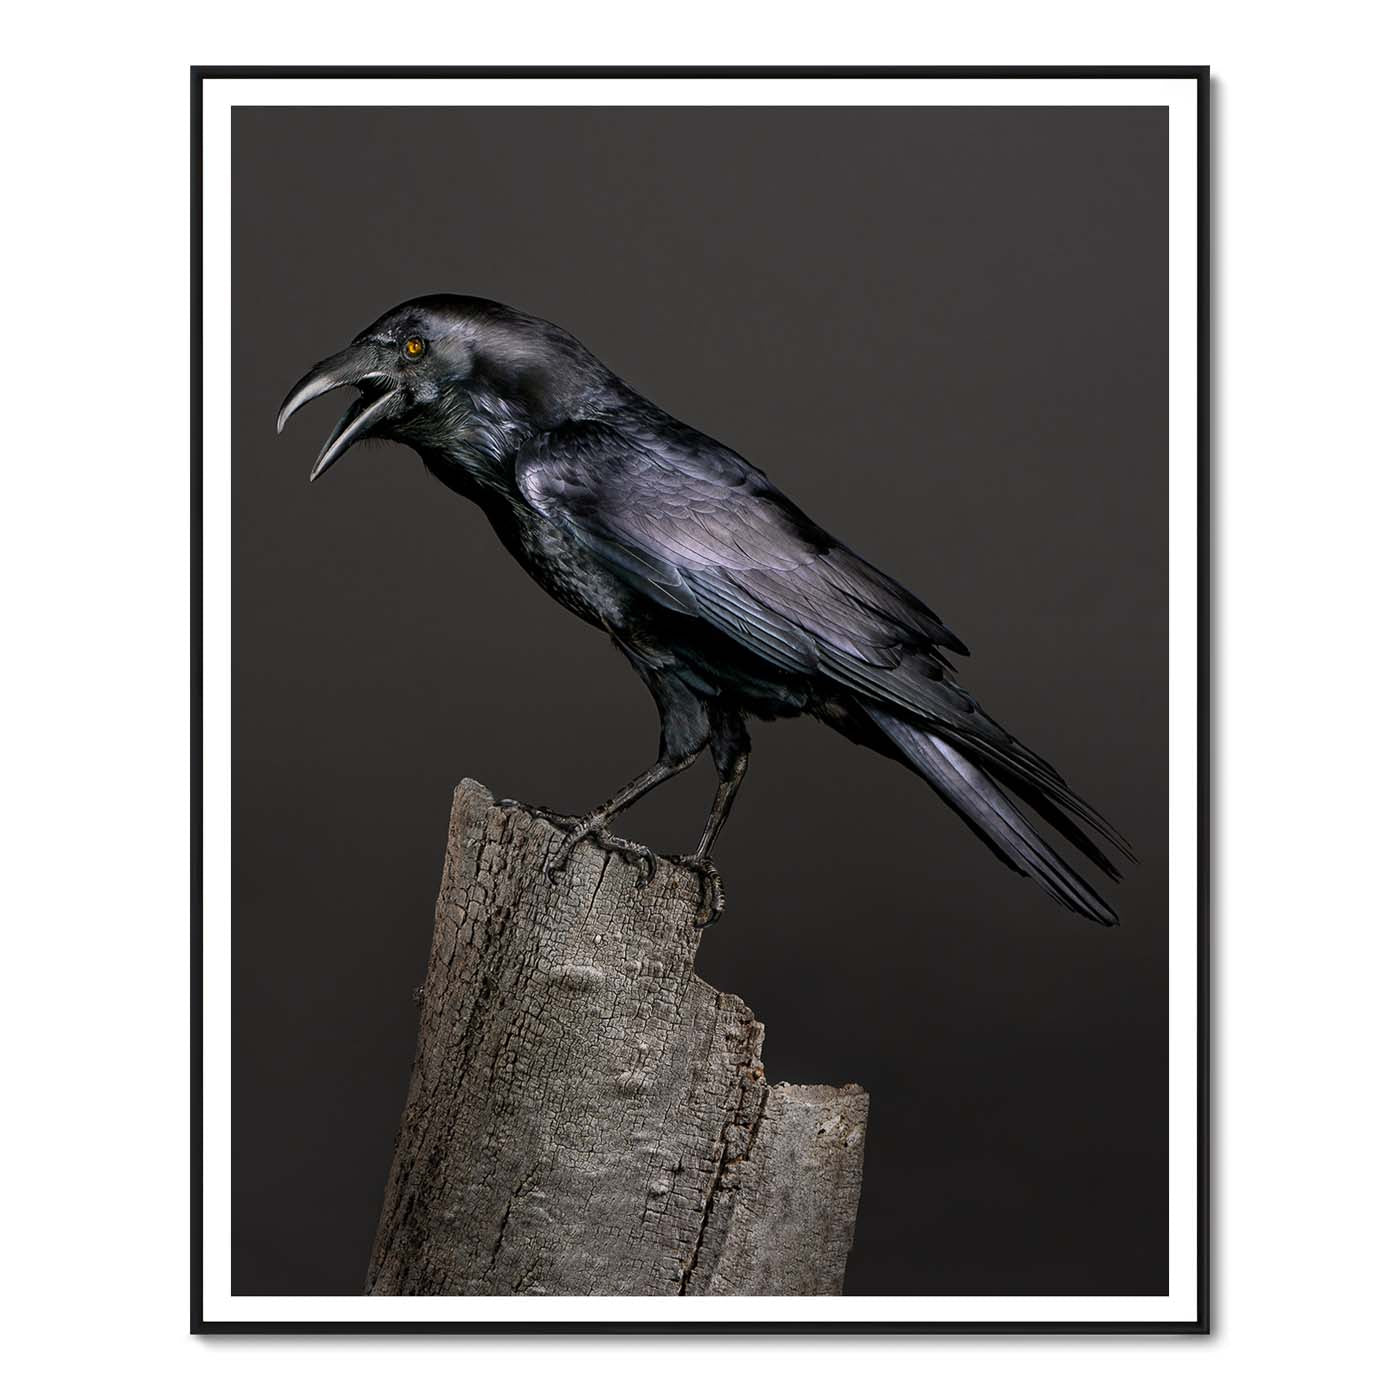 Poe, the half-blind Raven